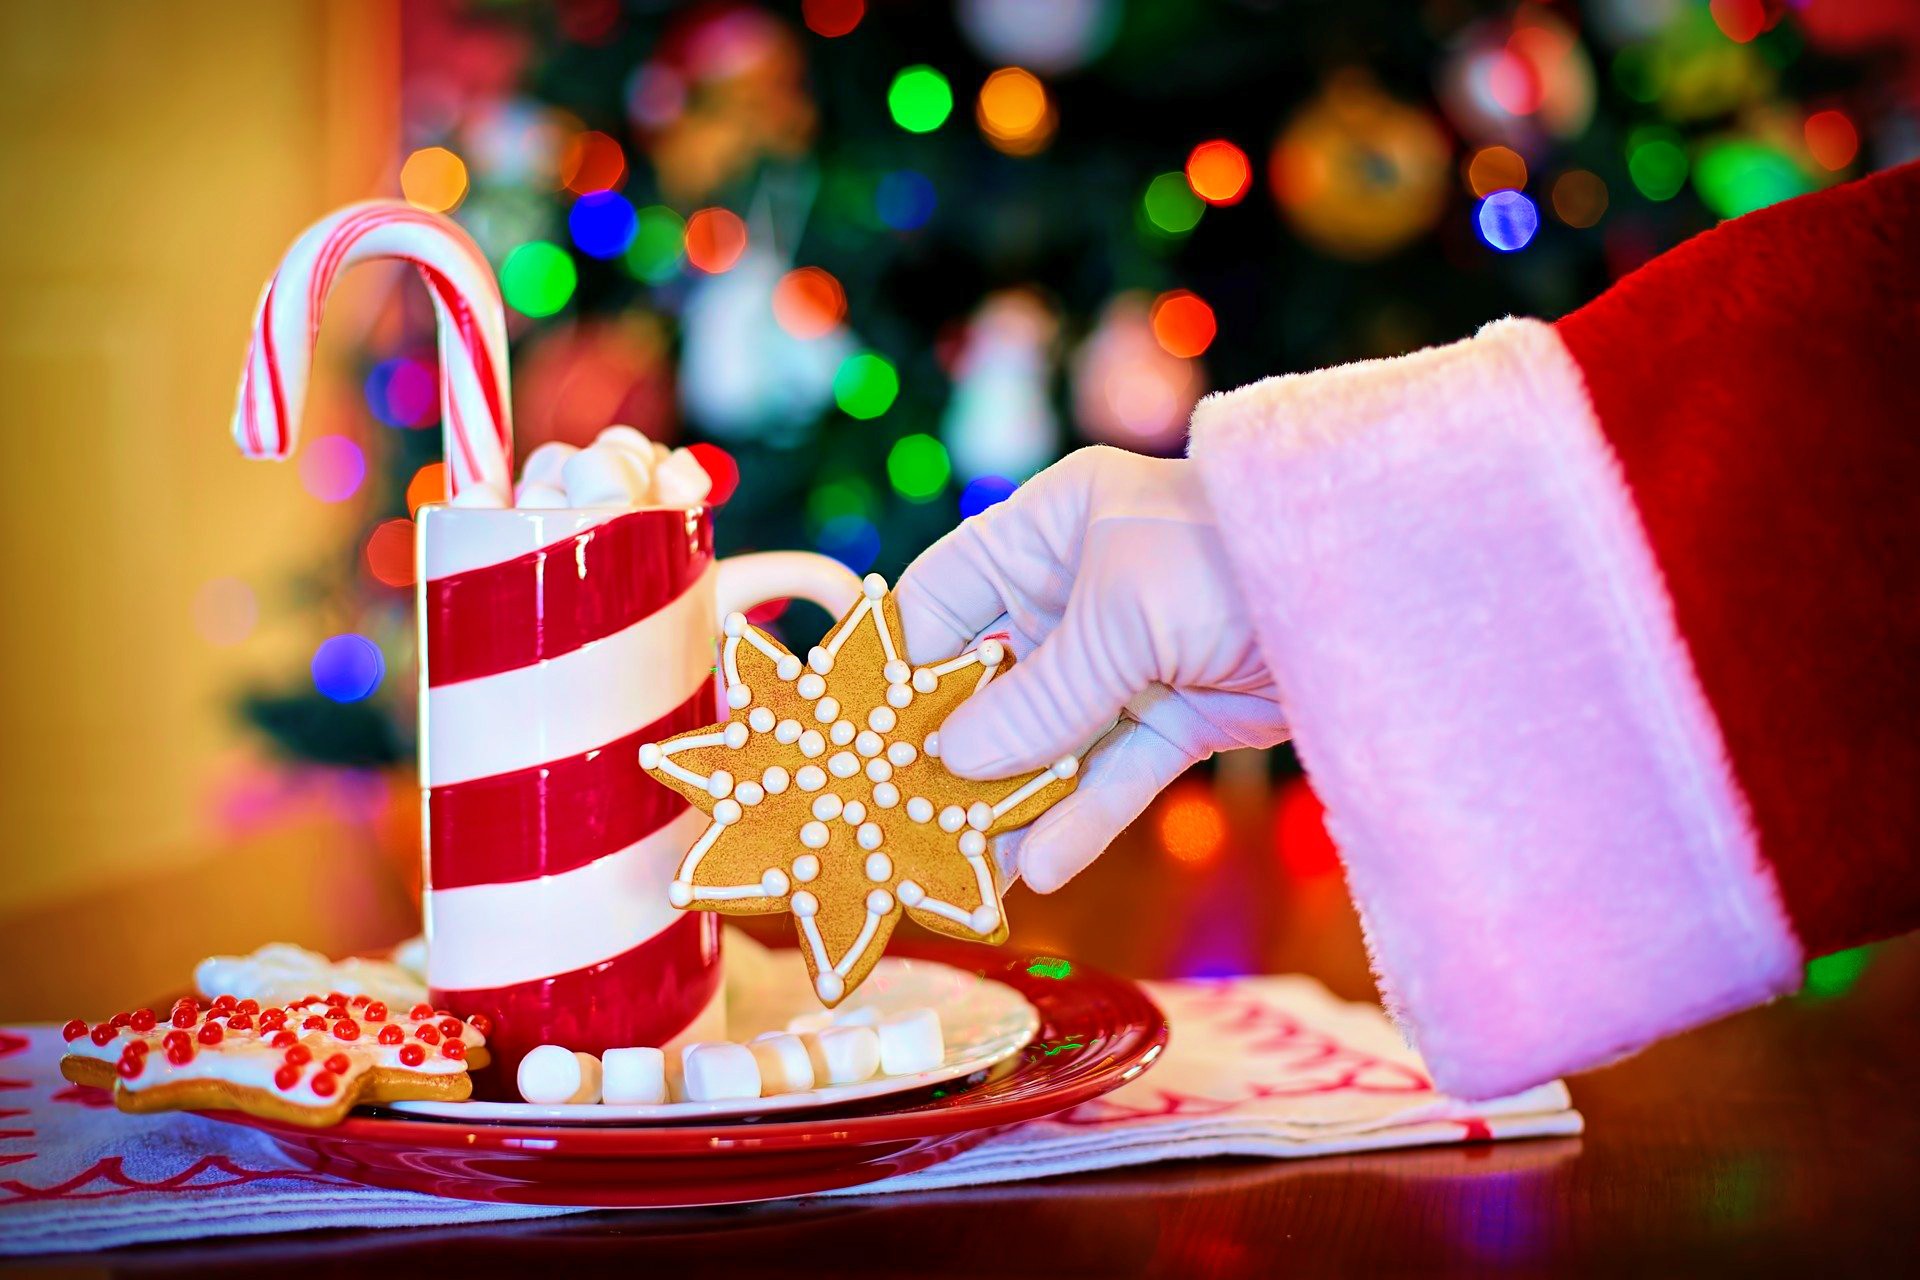 <img src="santa.jpg" alt="santa with cookies"/> 